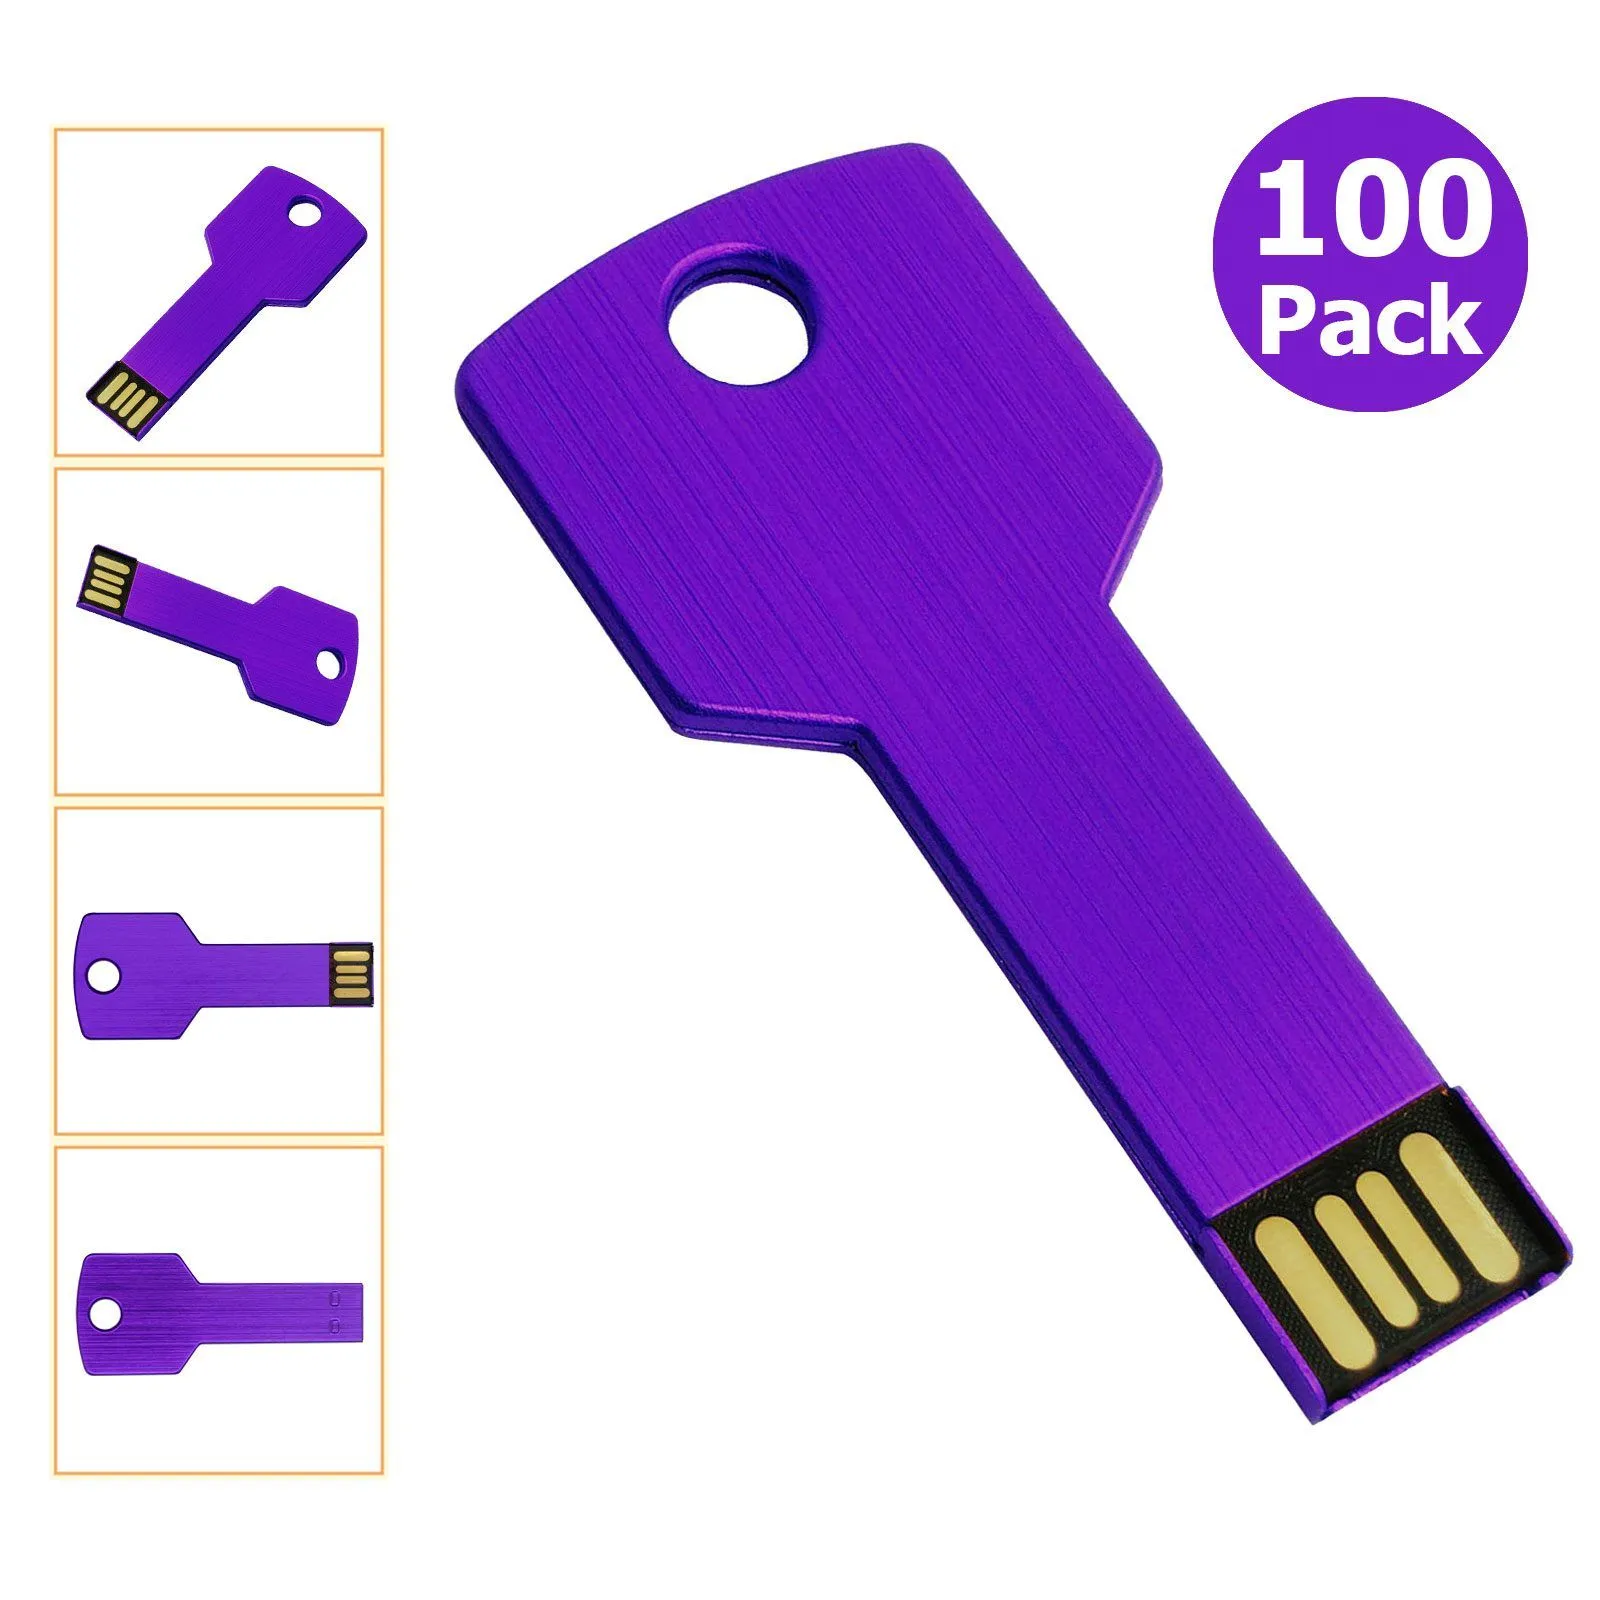 Free Shipping 100pcs 16GB USB 2.0 Flash Drives Flash Memory Stick Metal Key Blank Media for PC Laptop Macbook Thumb Pen Drives